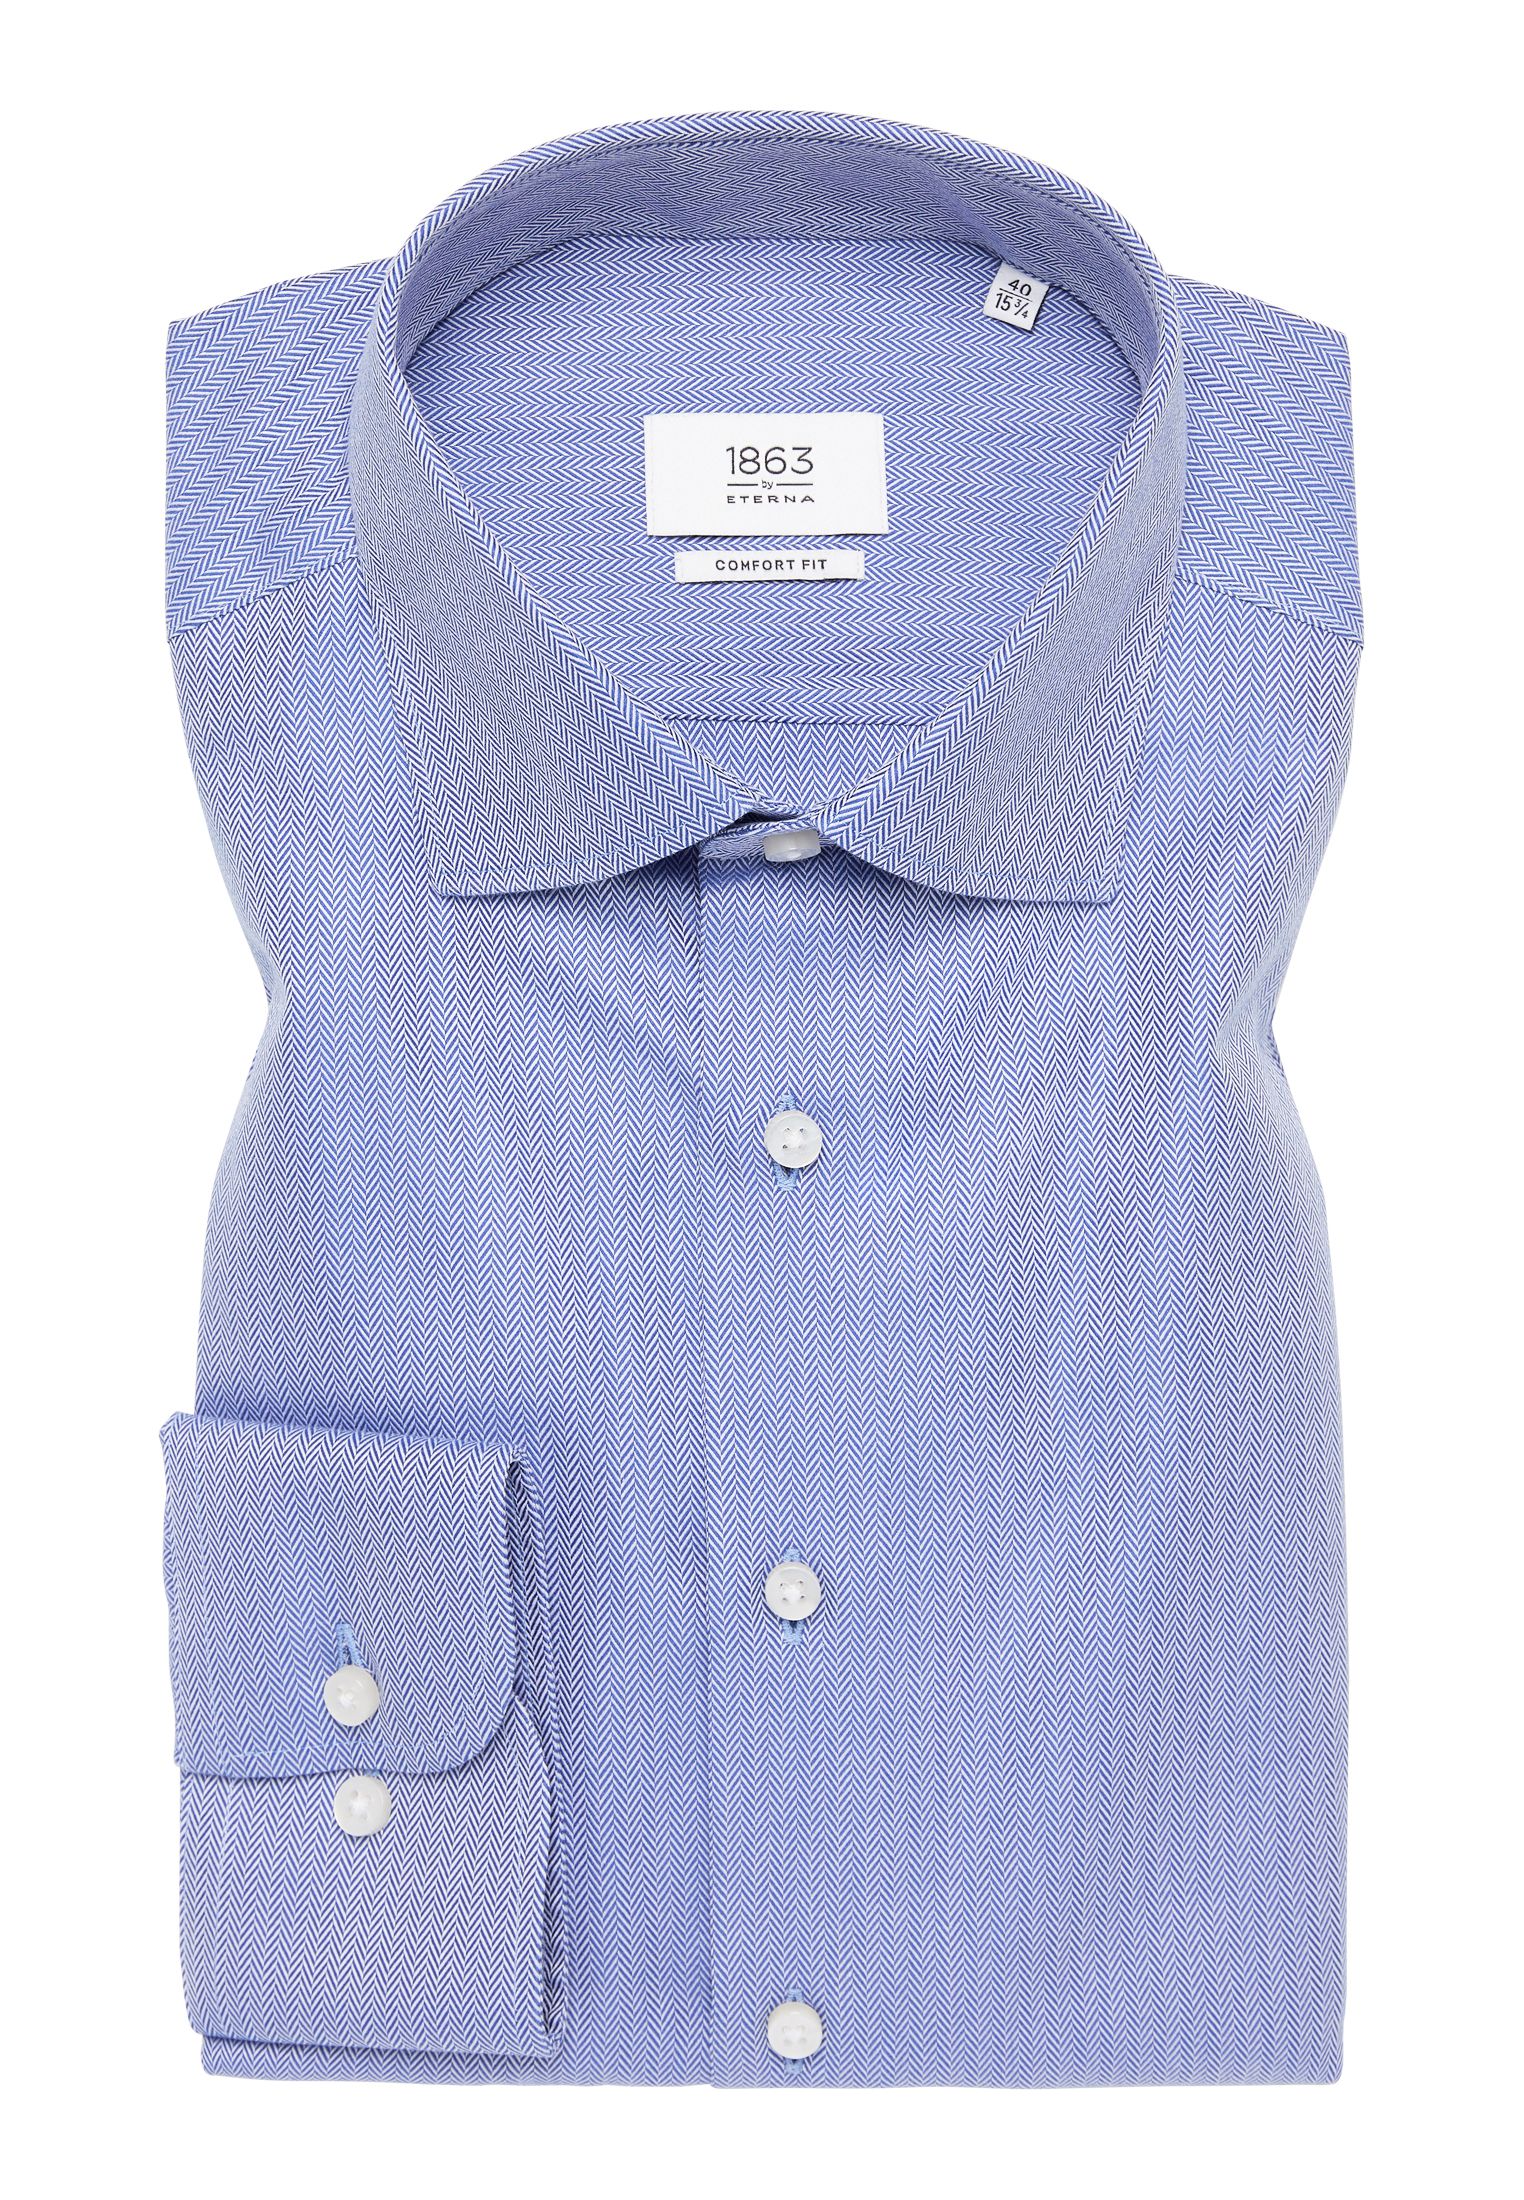 COMFORT FIT Shirt in royal blue plain | royal blue | 40 | long sleeve |  1SH12506-01-51-40-1/1